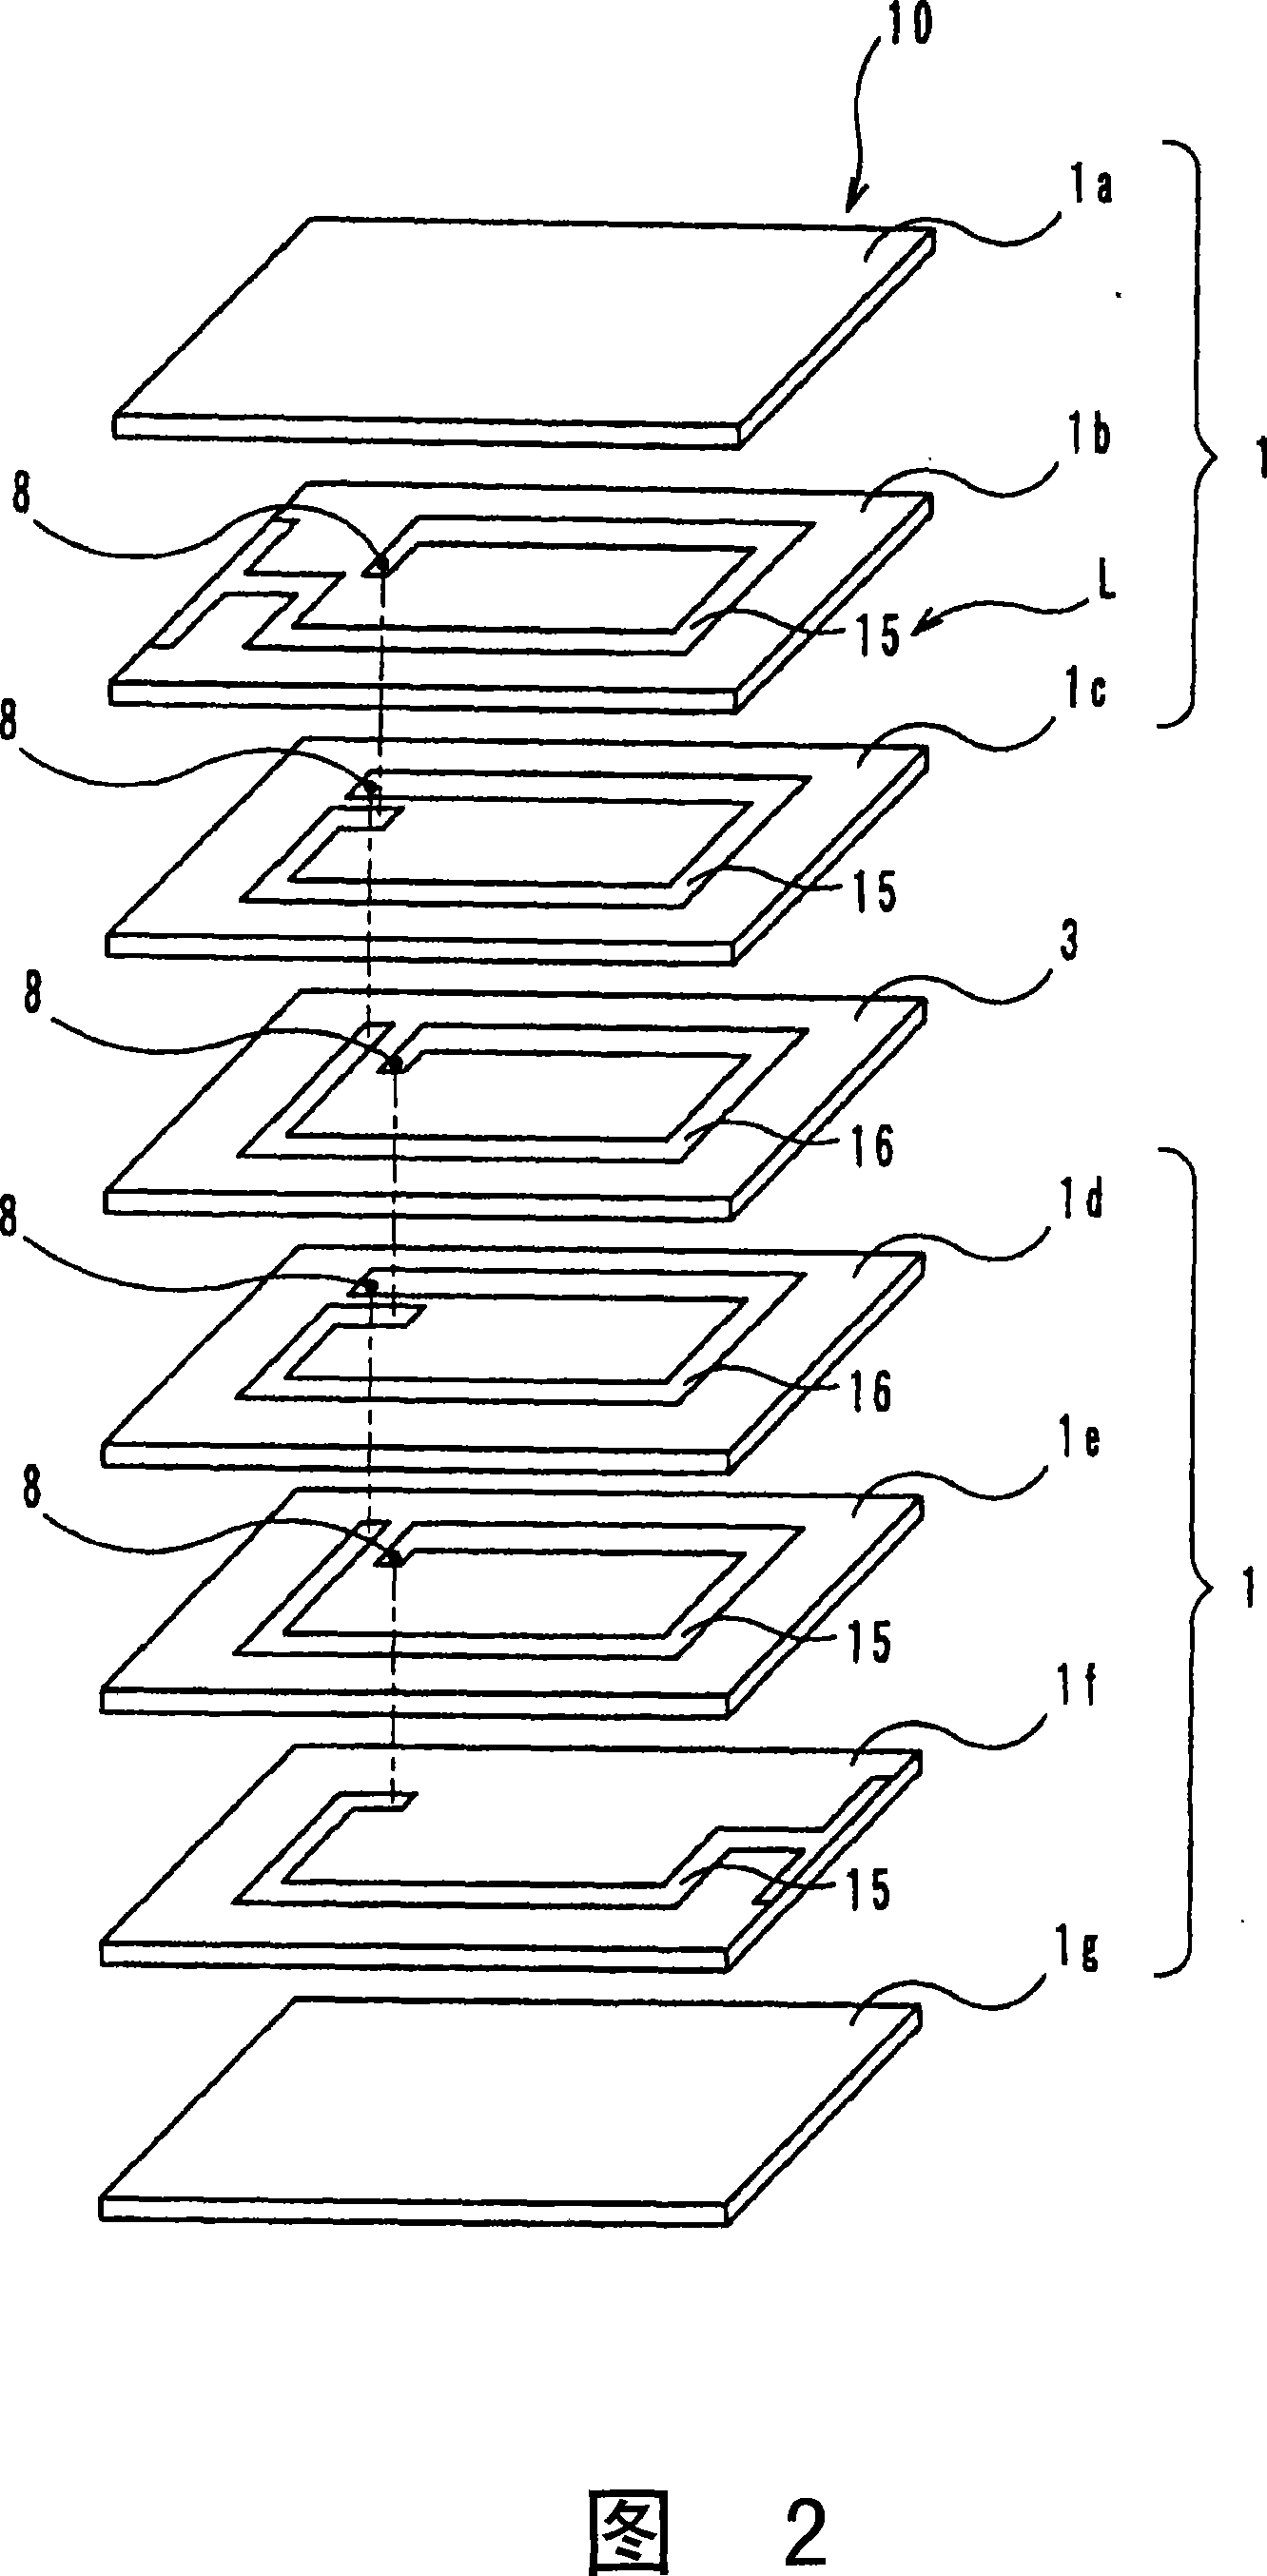 Multilayer coil